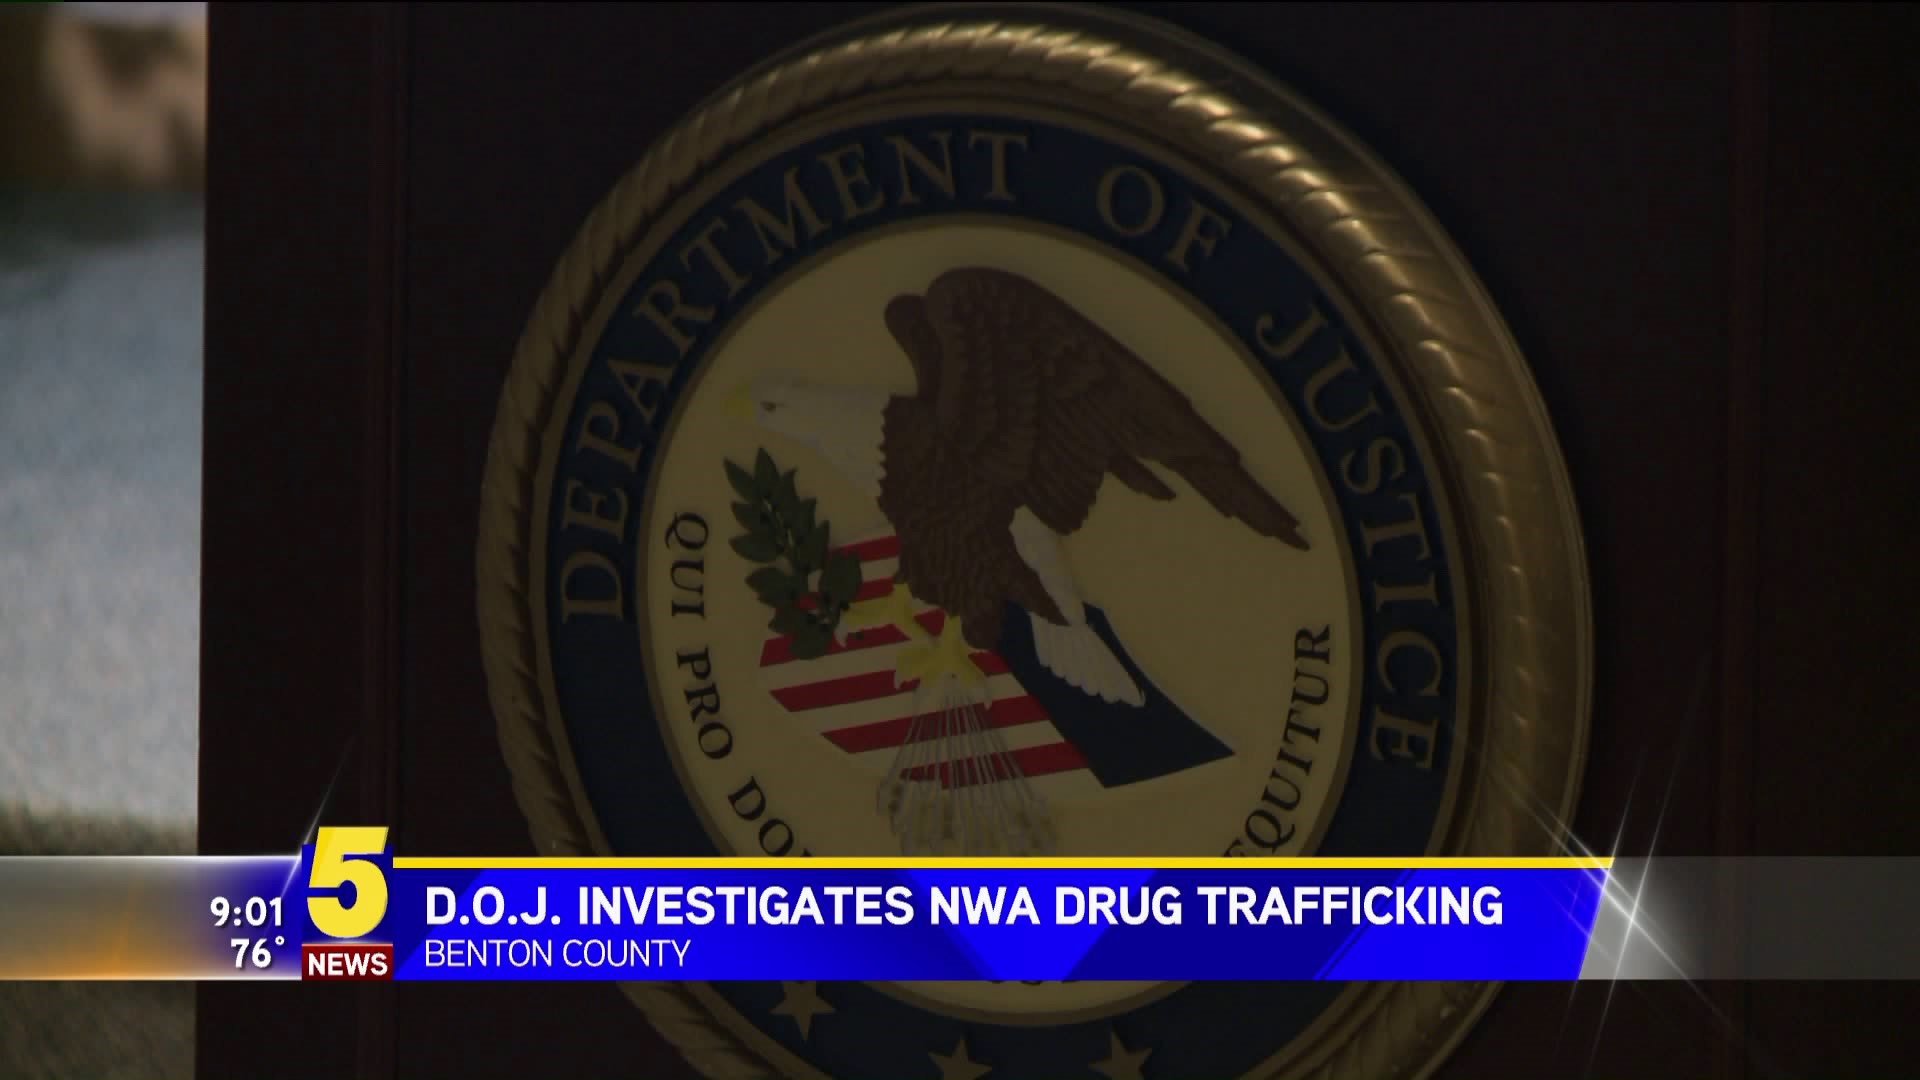 D.O.J. Investigates NWA Drug Trafficking